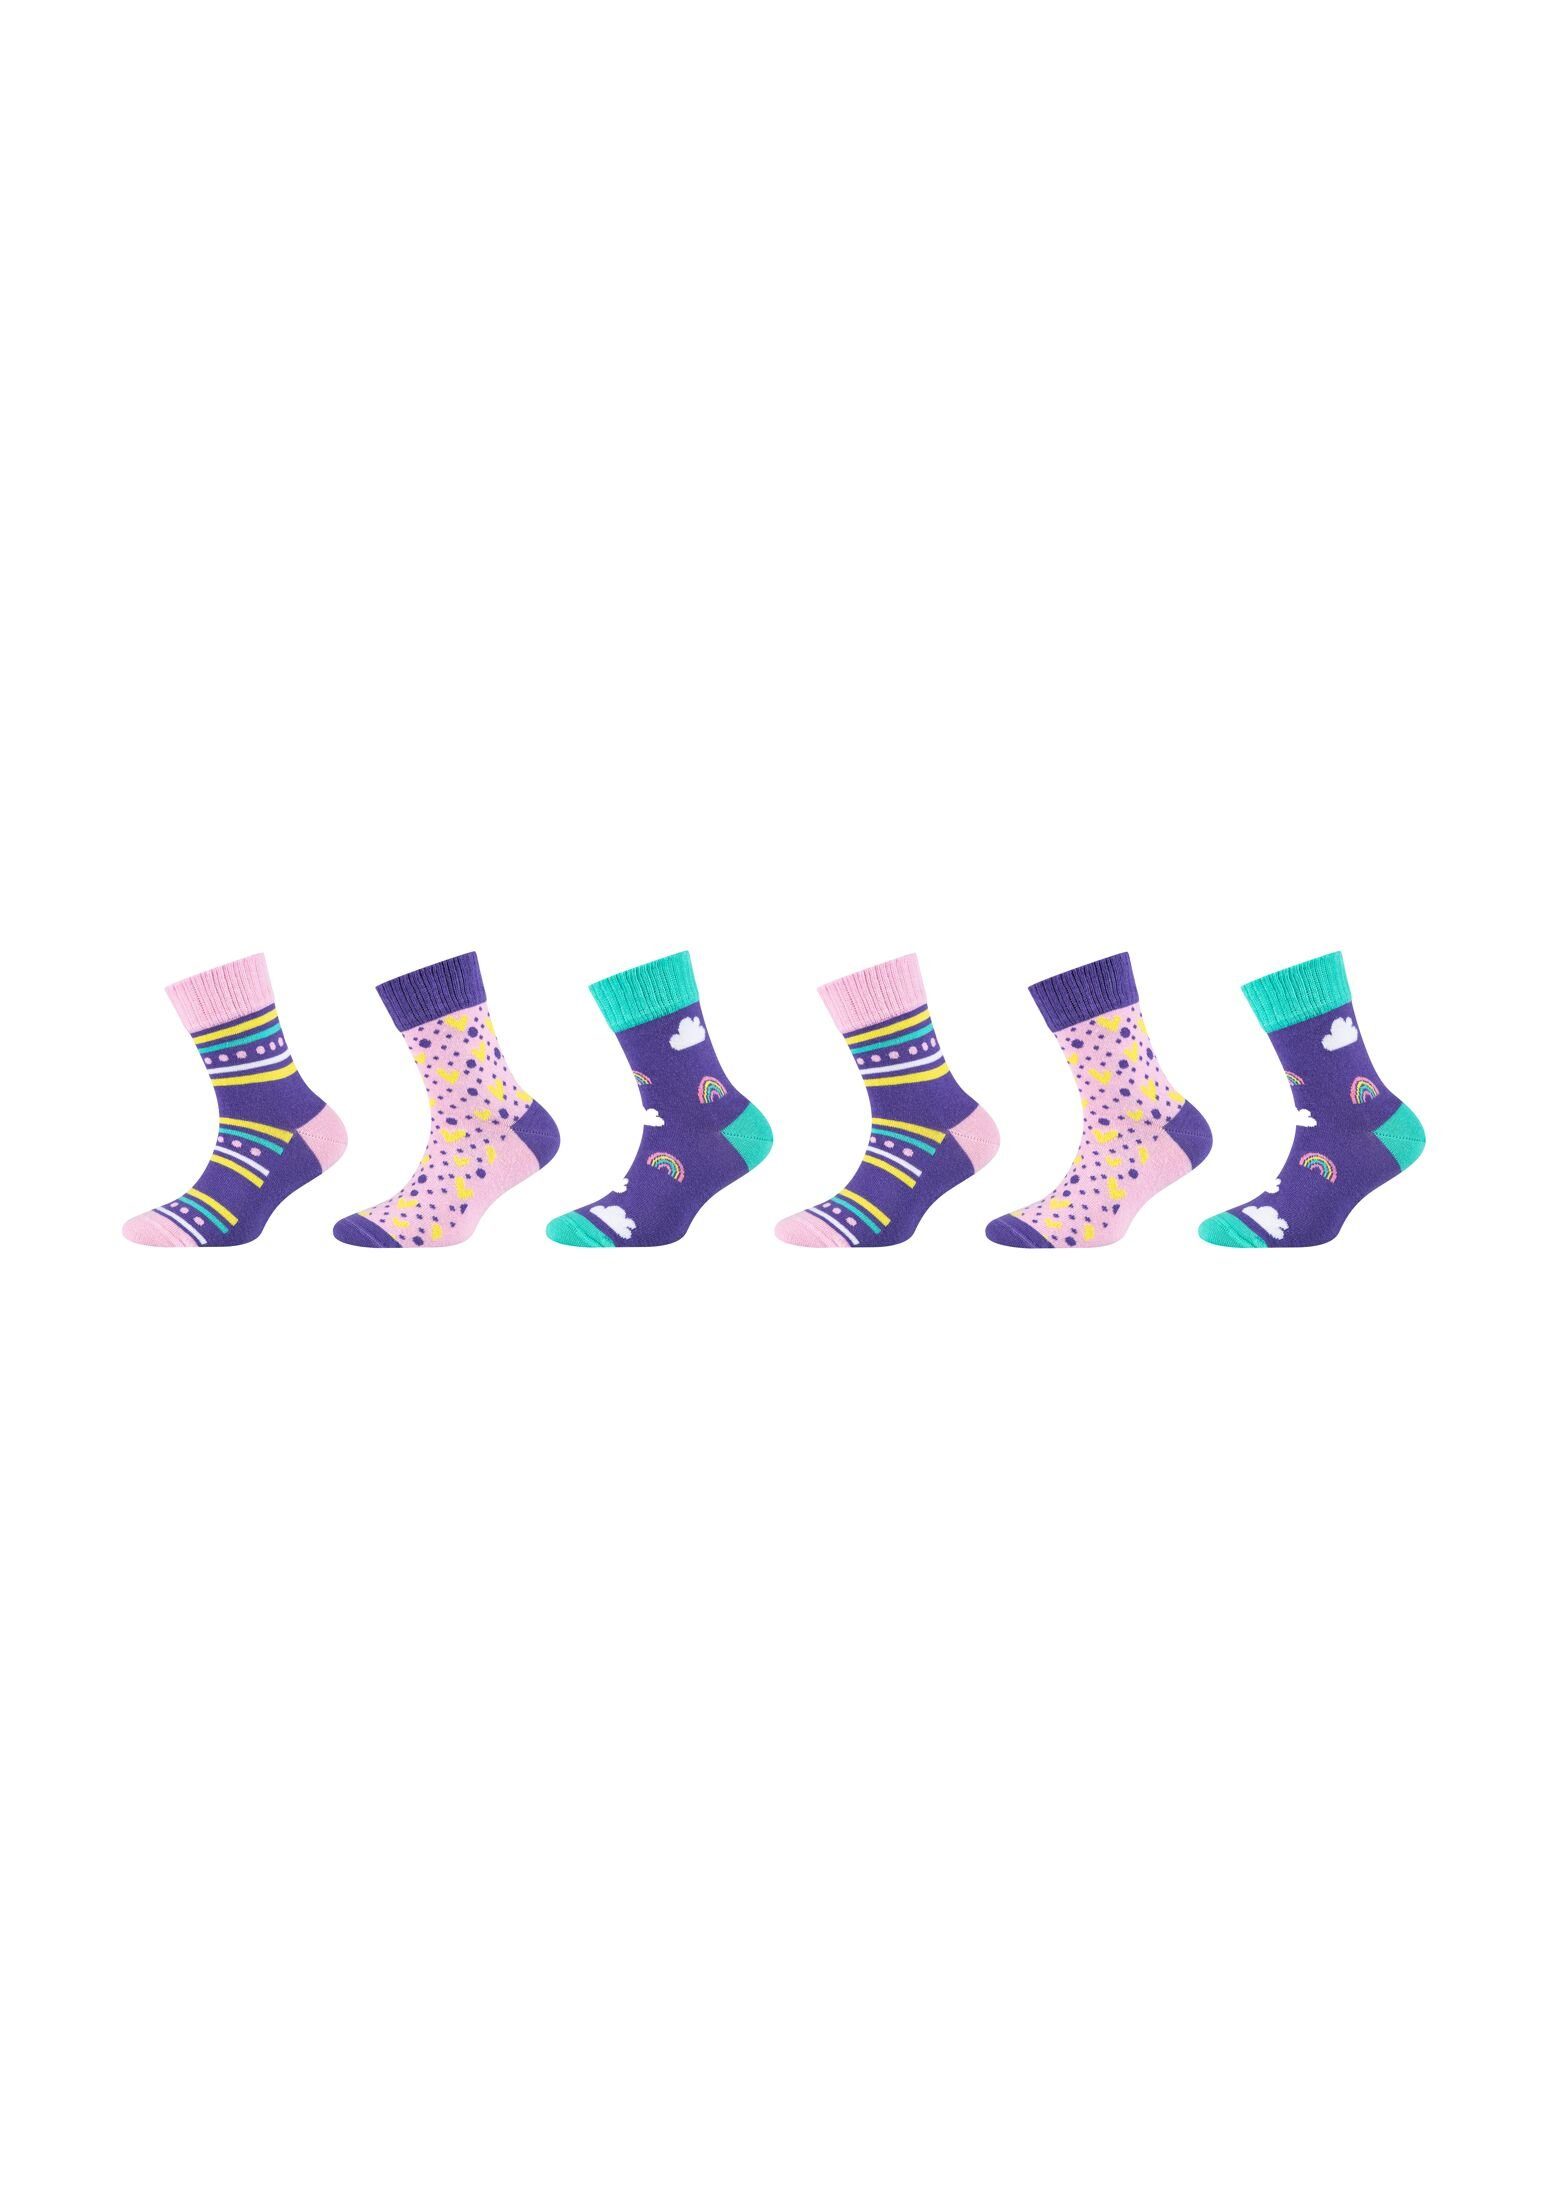 Optimale Skechers Socken Passform: 6er ohne Sitz Verrutschen perfekter Socken Pack,